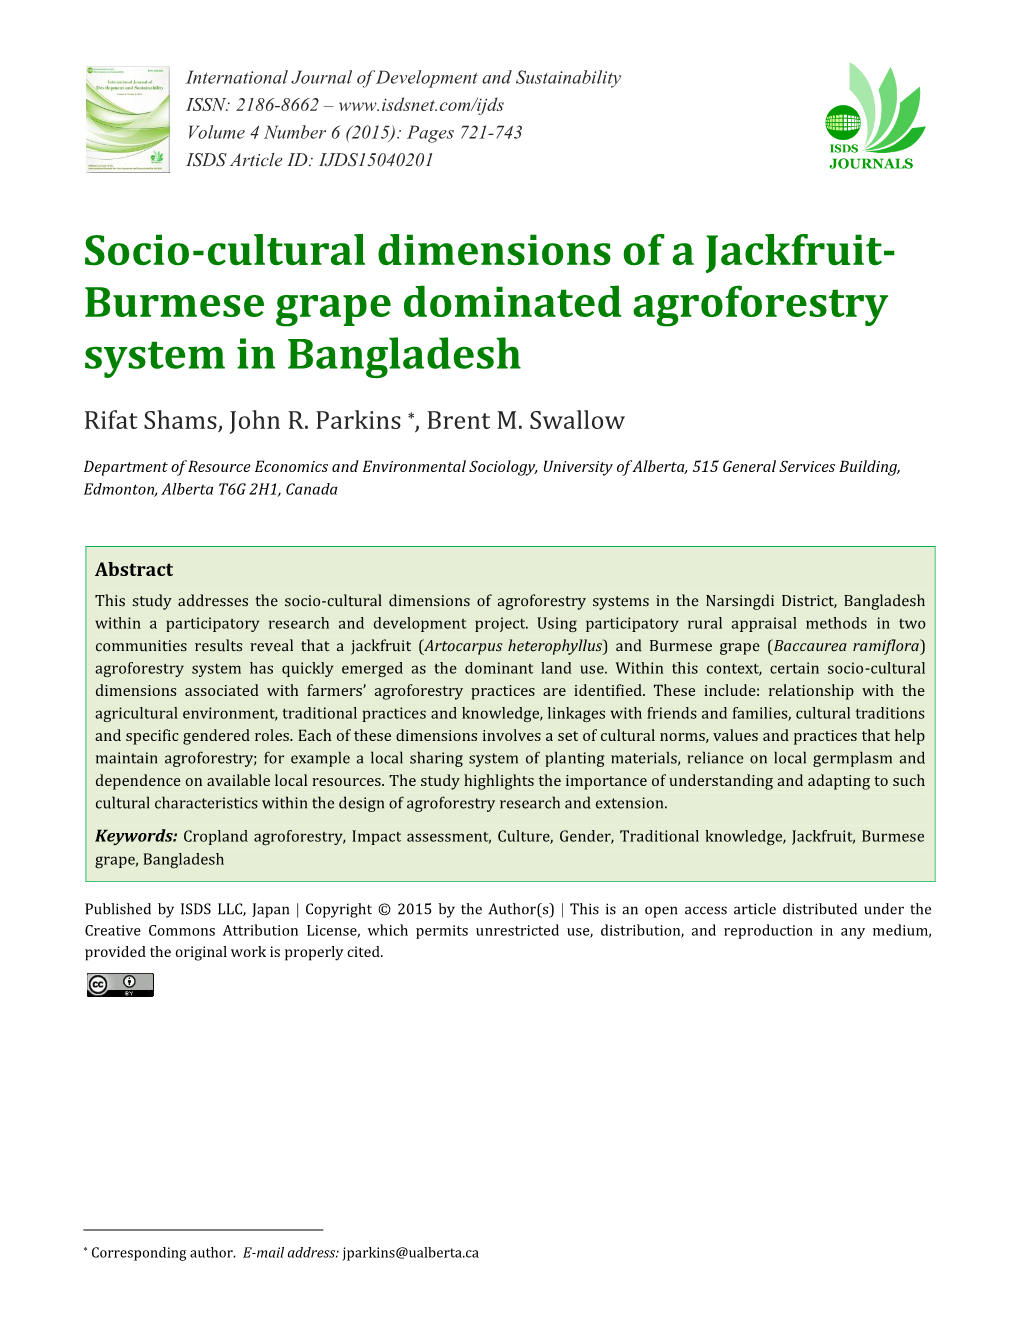 Socio-Cultural Dimensions of a Jackfruit-Burmese Grape Dominated